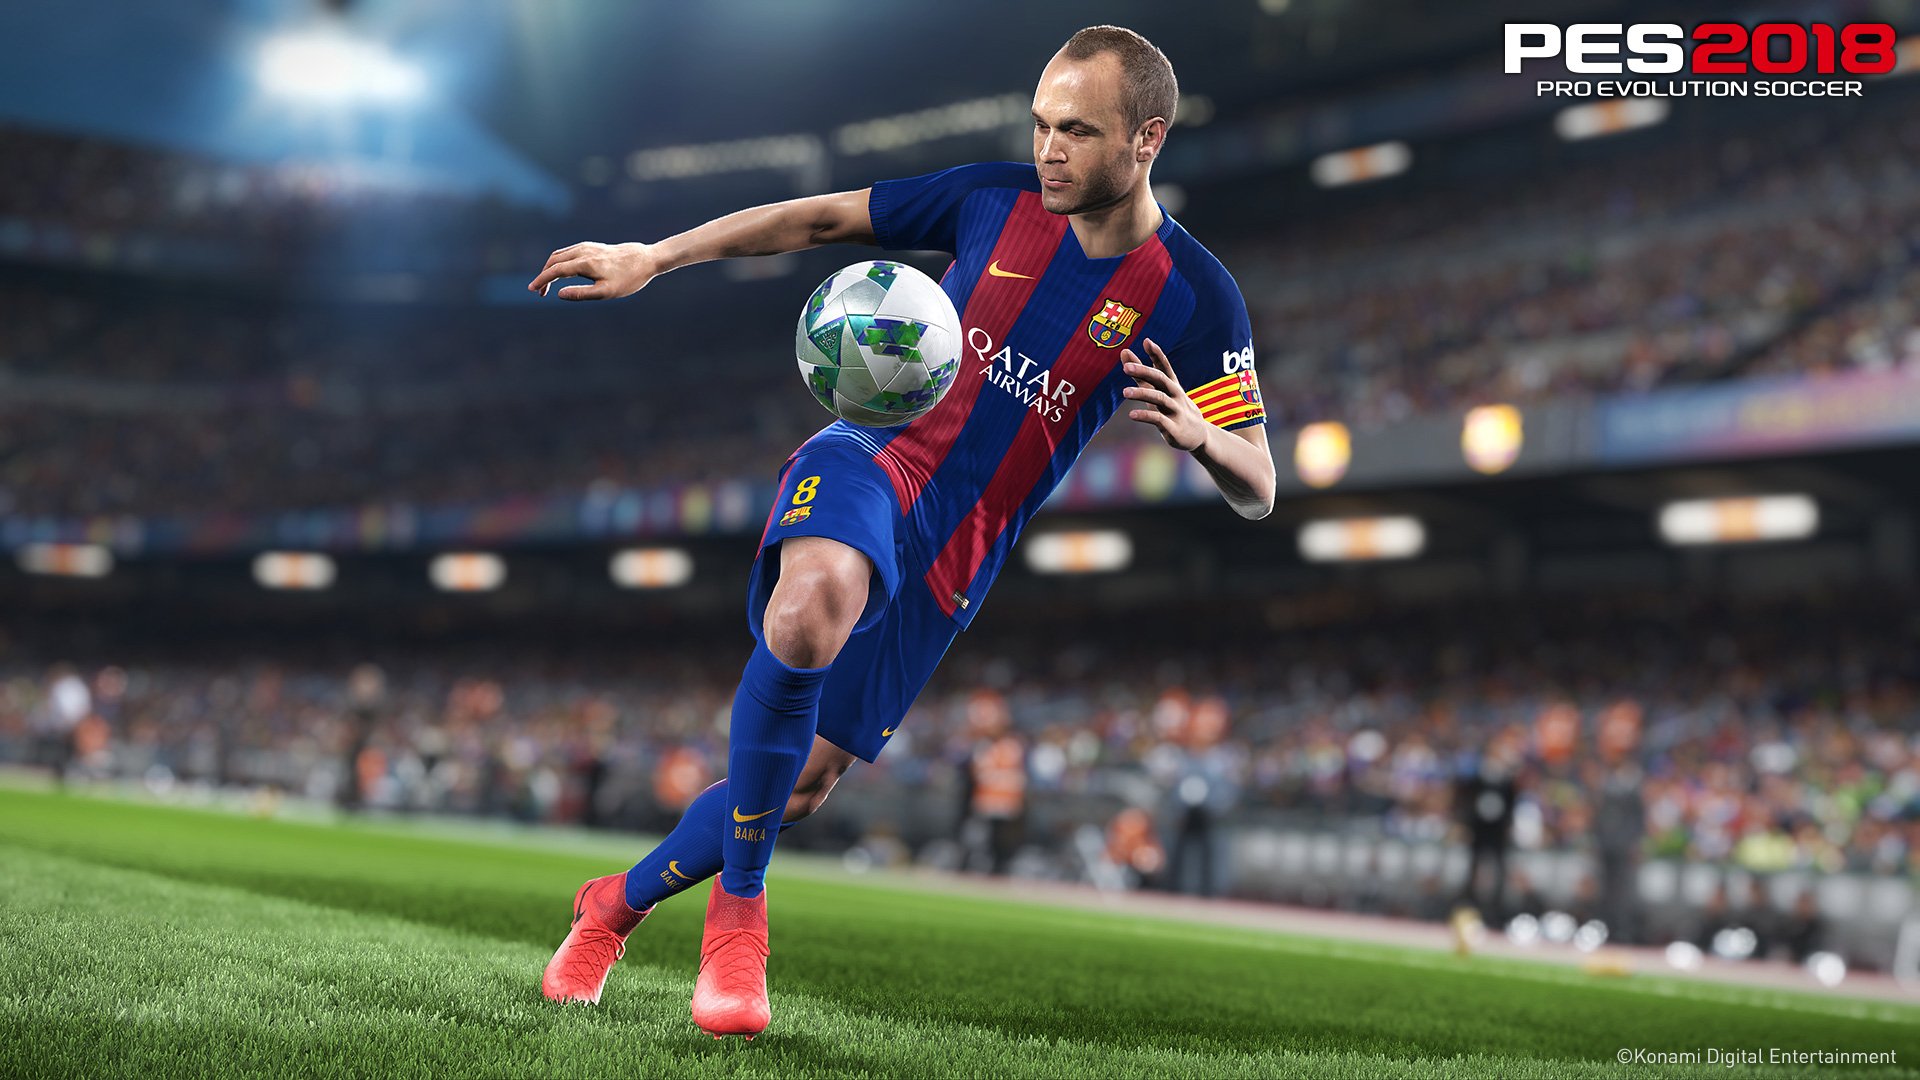 Pro Evolution Soccer 2018 - PlayStation 3